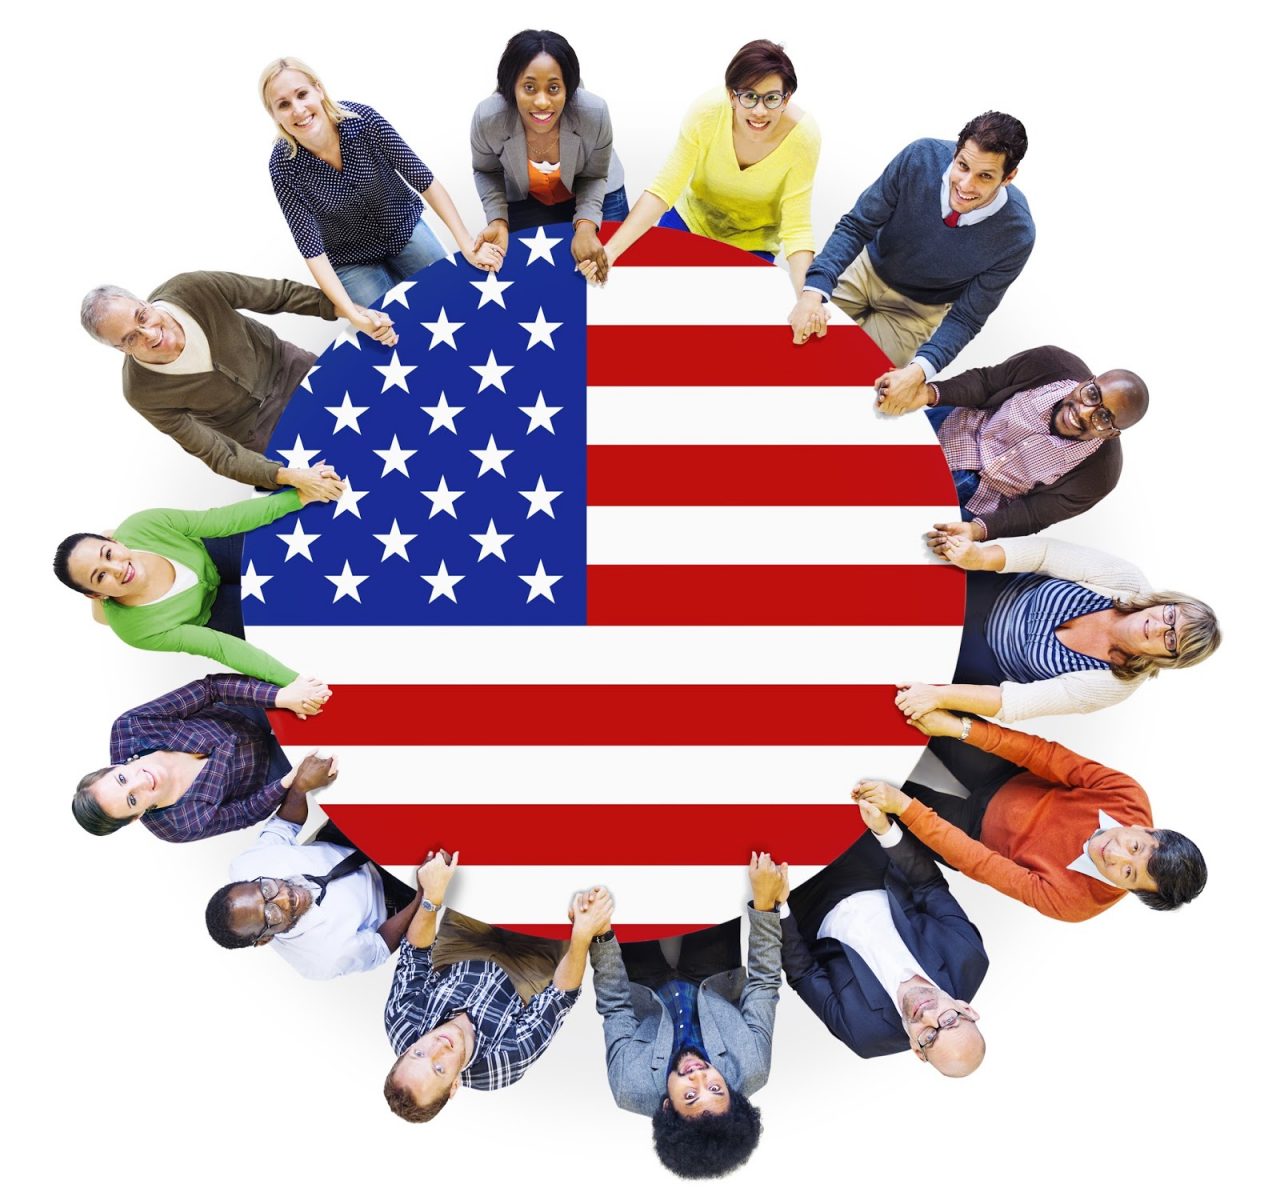 diverse american citizens Courtesy of RawpixelShutterstockcom _210362140